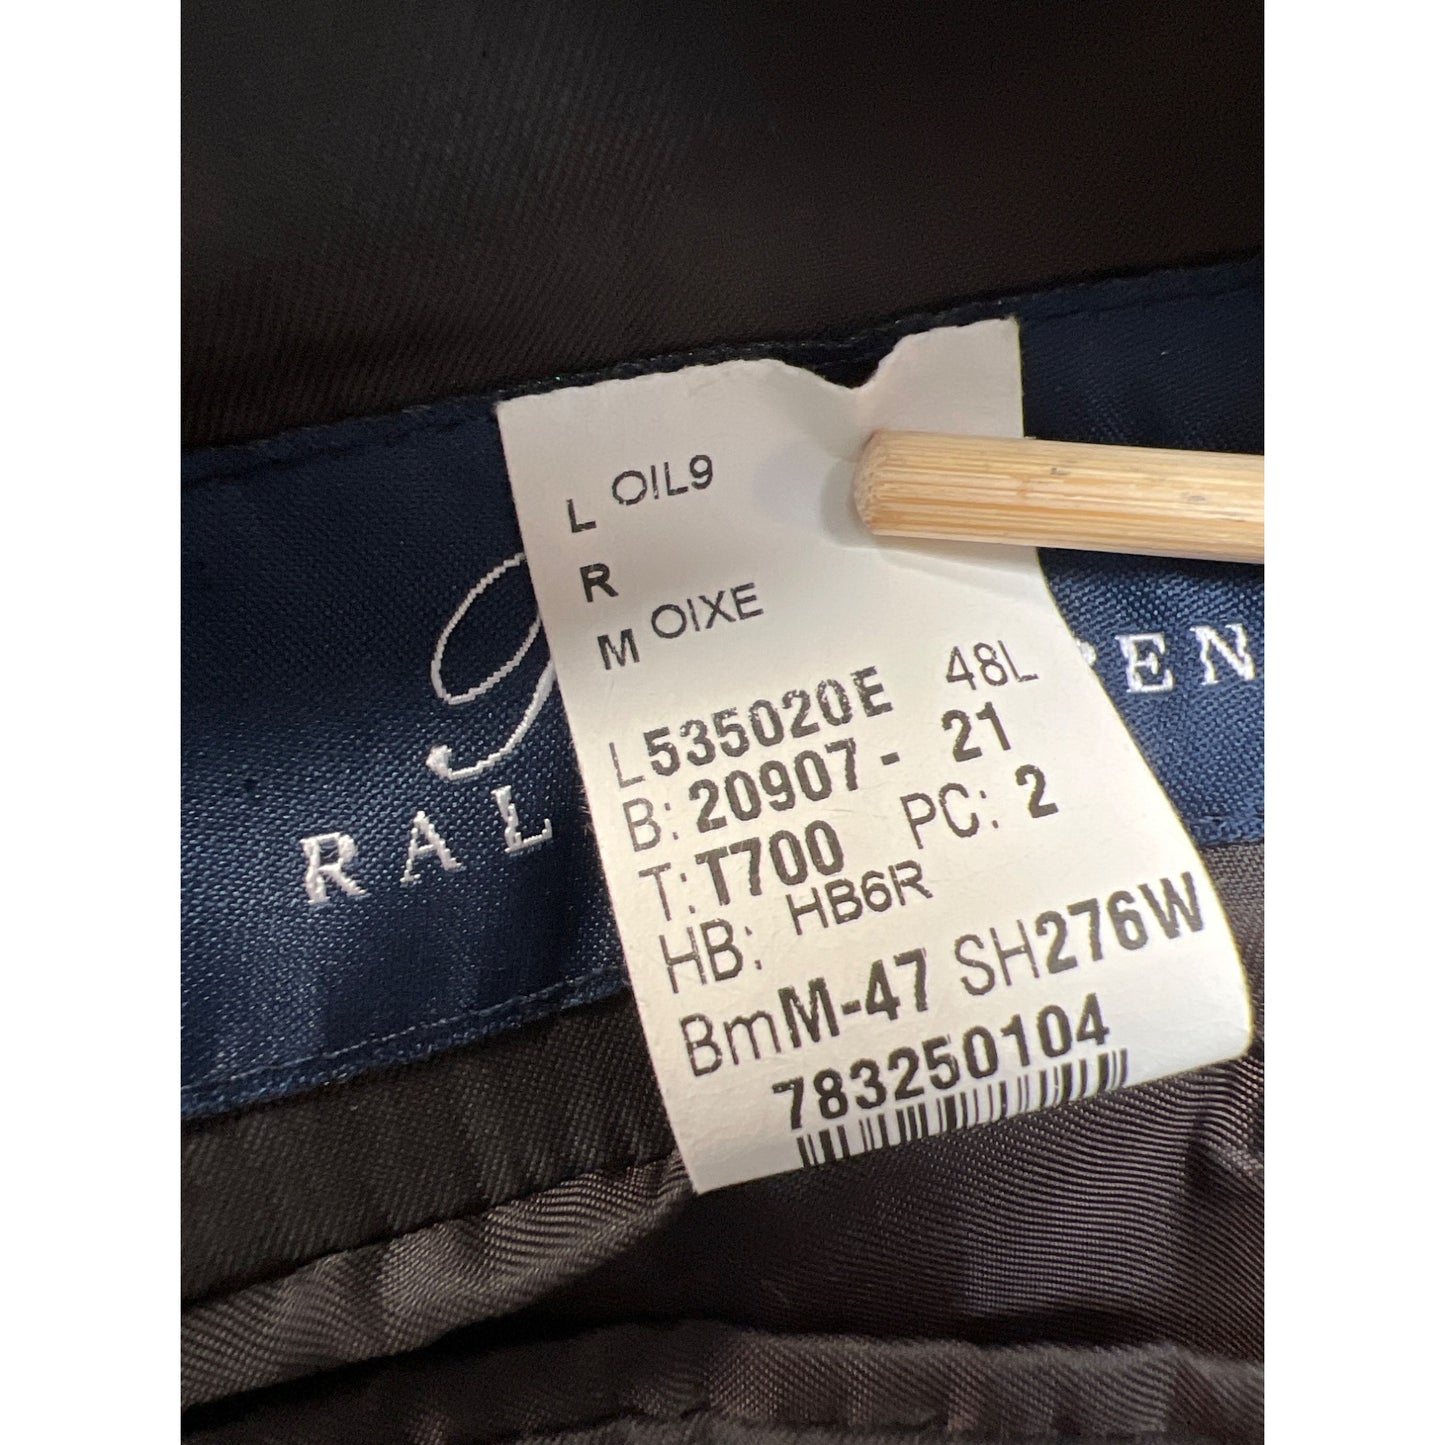 RALPH Ralph Lauren Gray and Navy Plaid 100% Wool Blazer